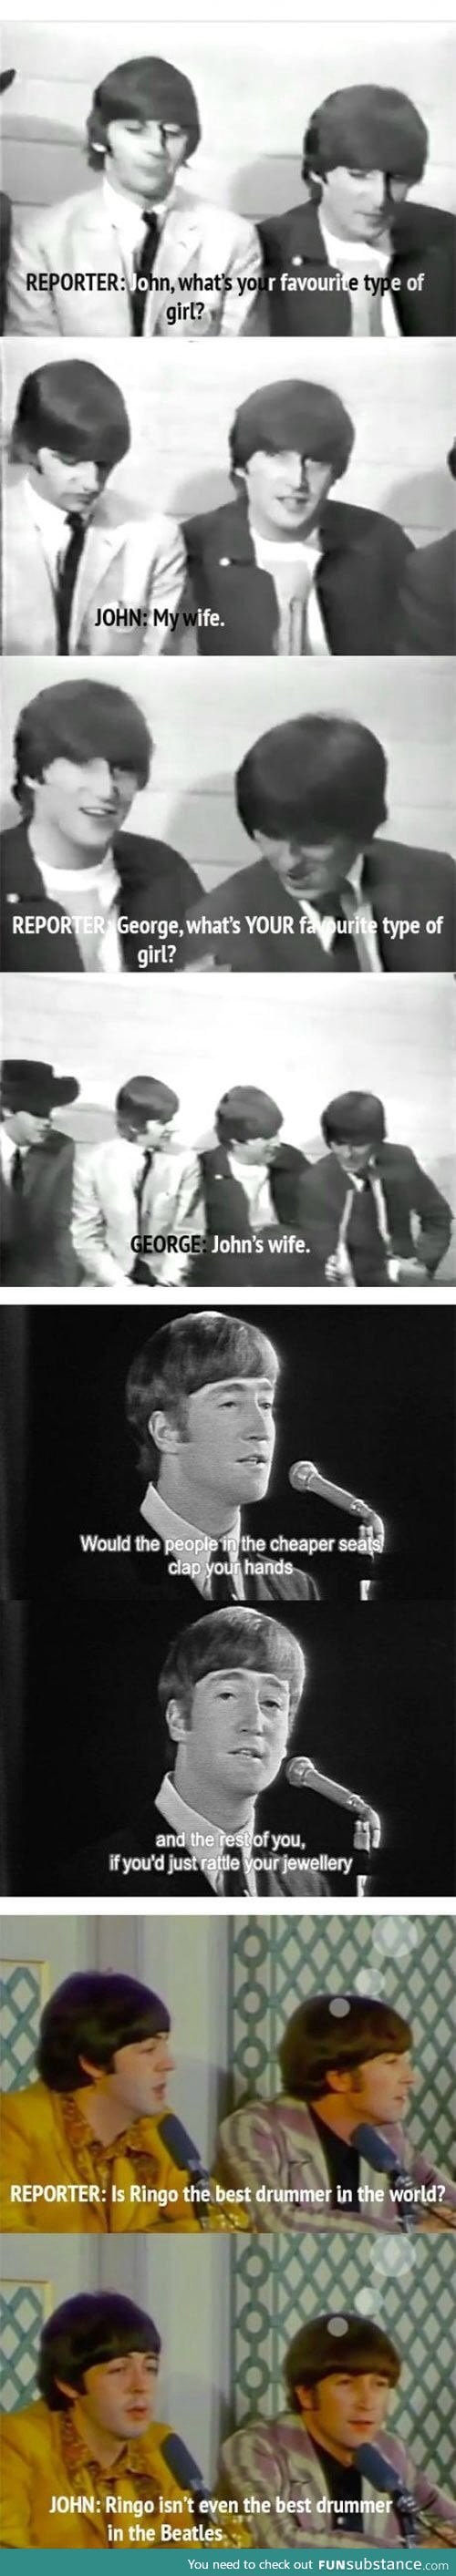 Beatles again~